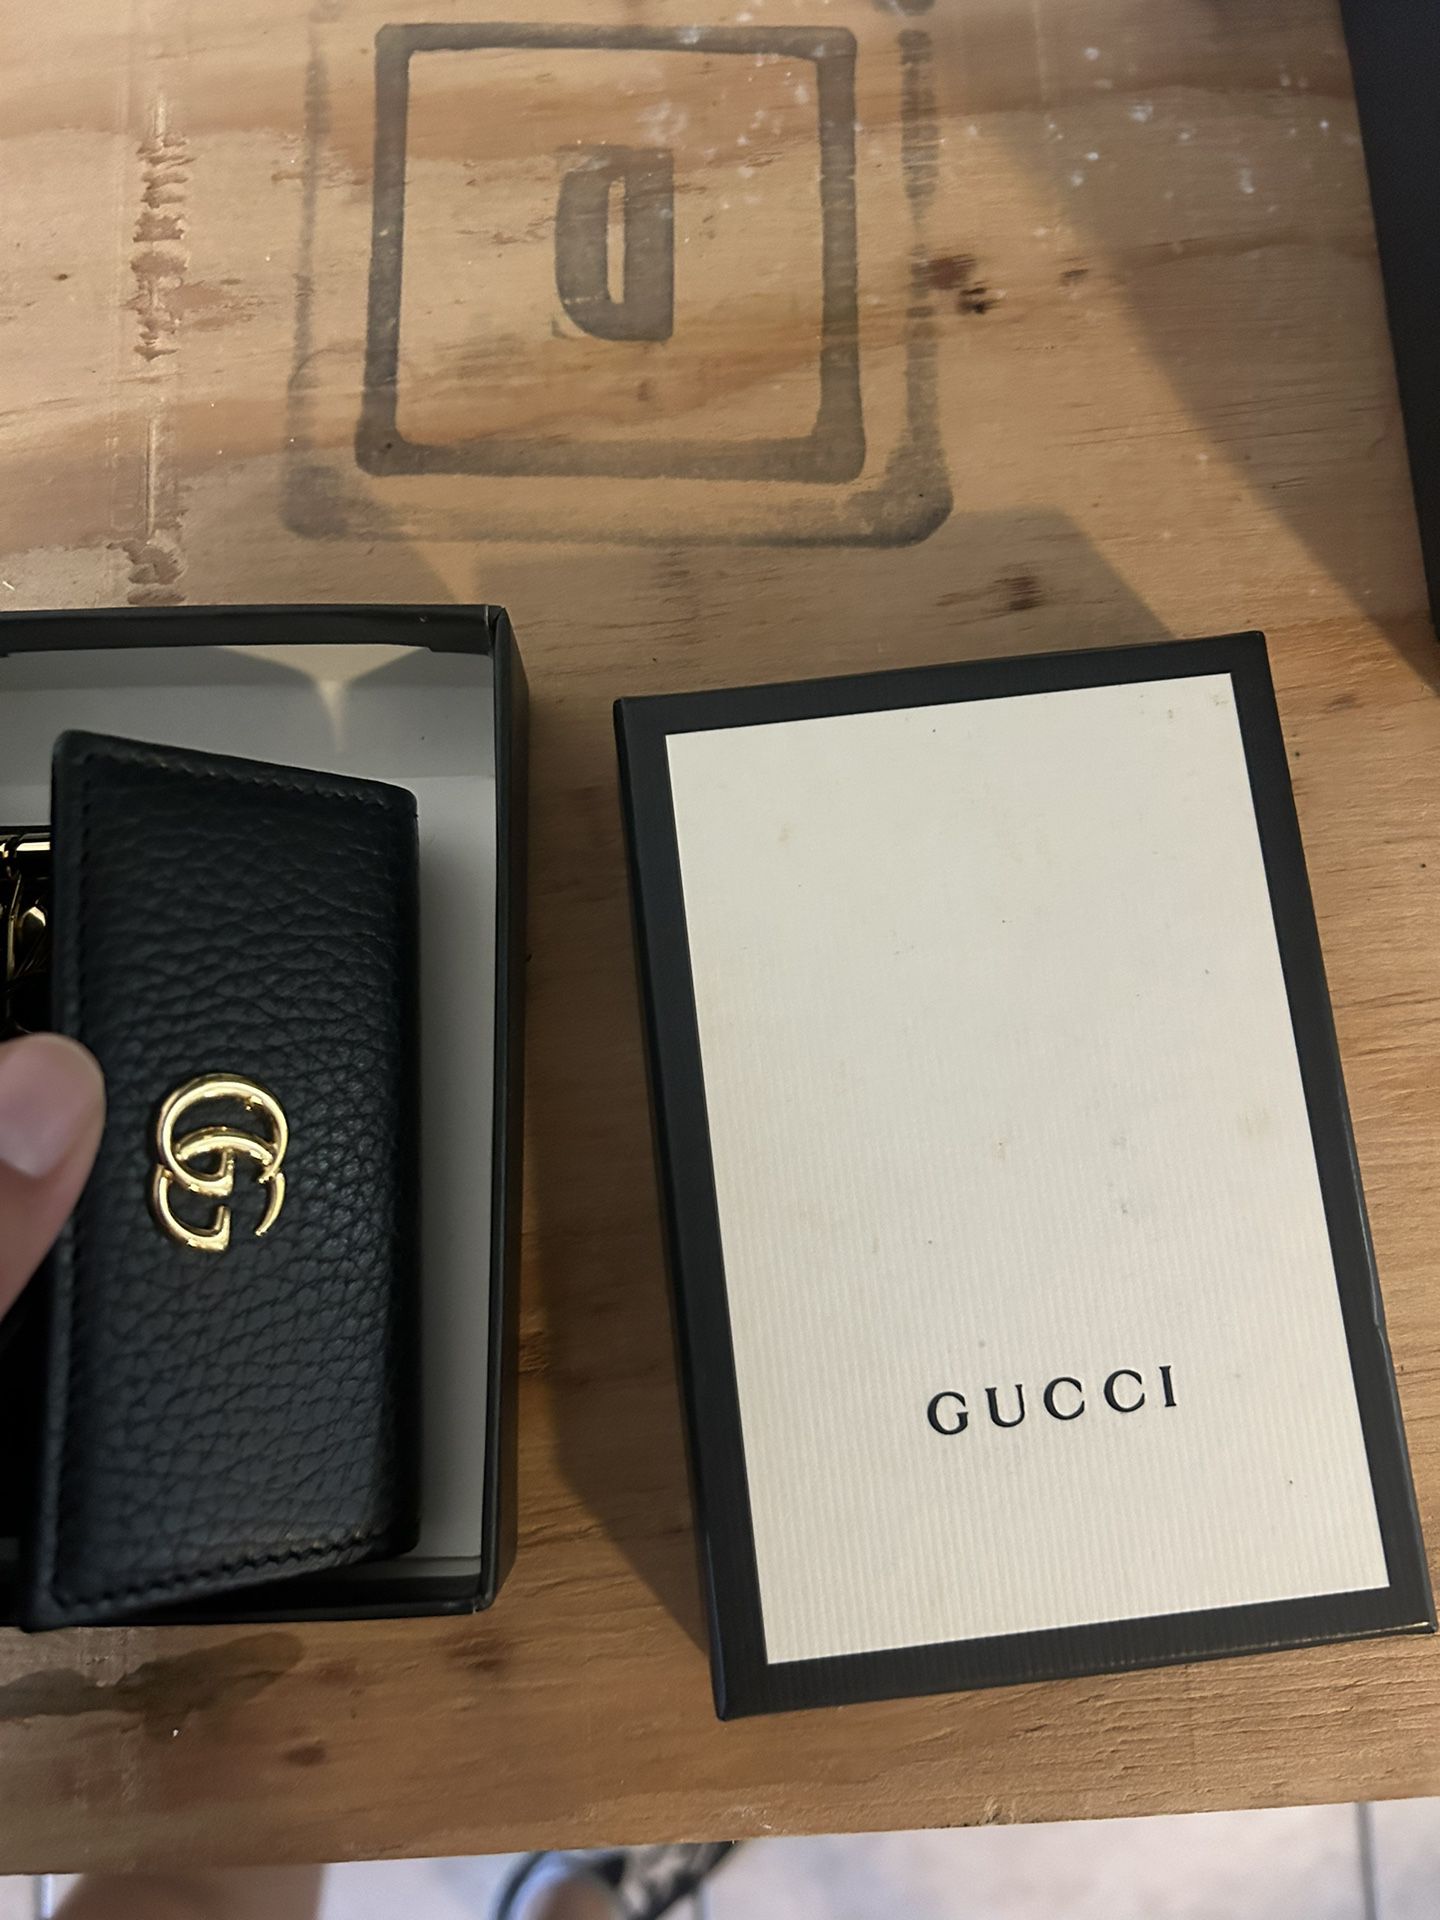 $80 Dollars Gucci Wallet Key Chain